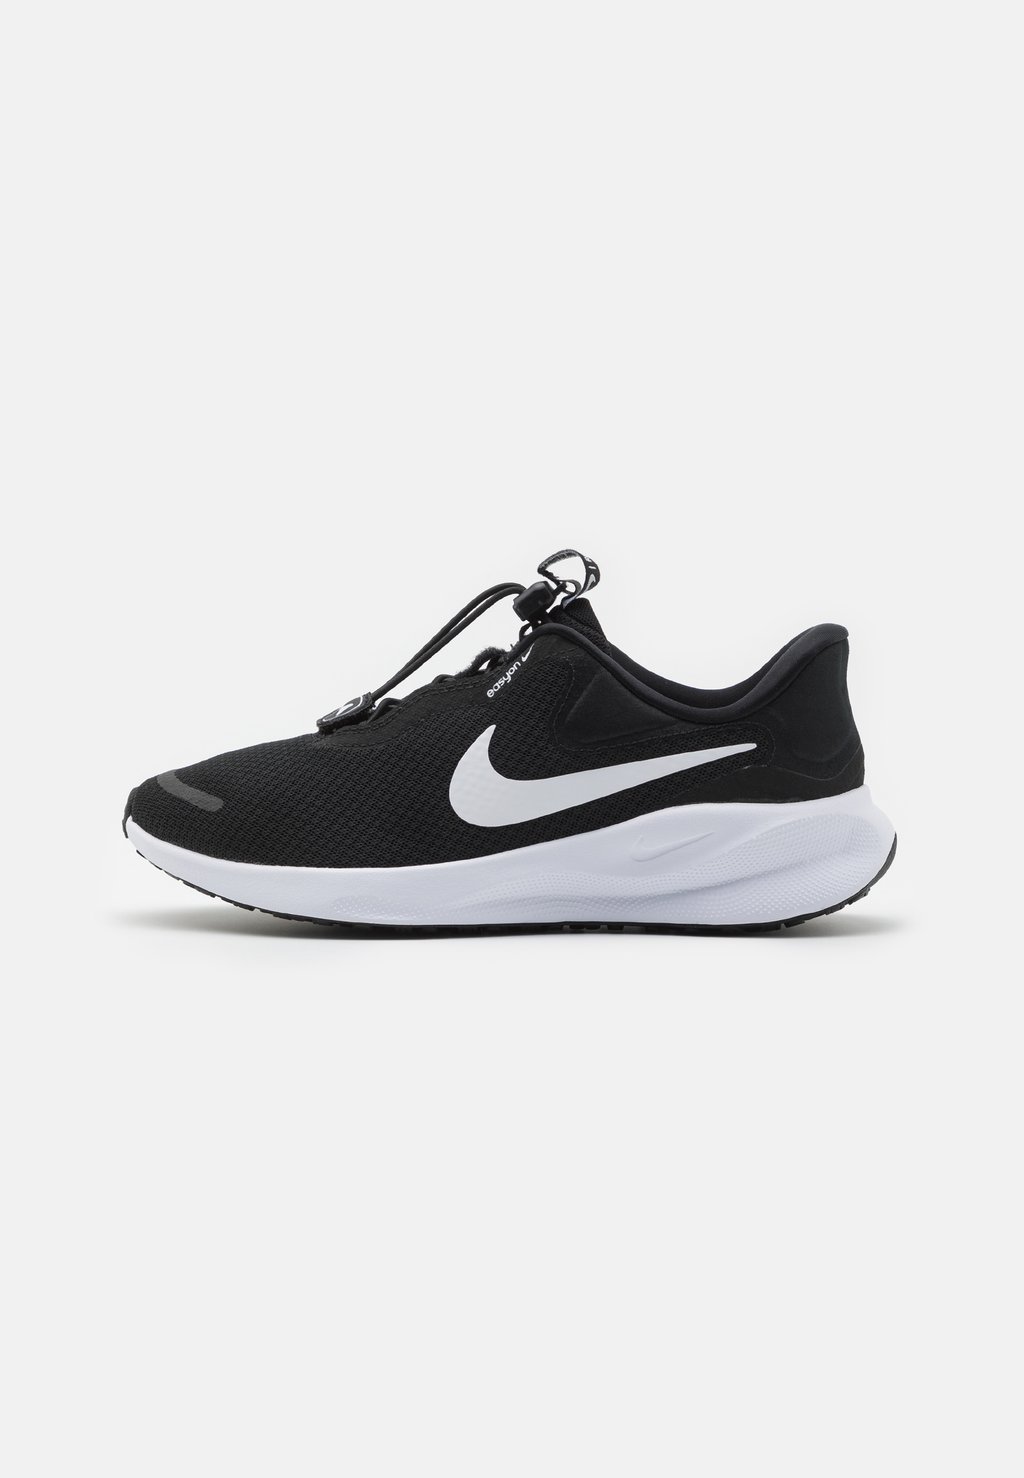 Кроссовки нейтрального цвета REVOLUTION 7 EASYON , цвет black/white Nike